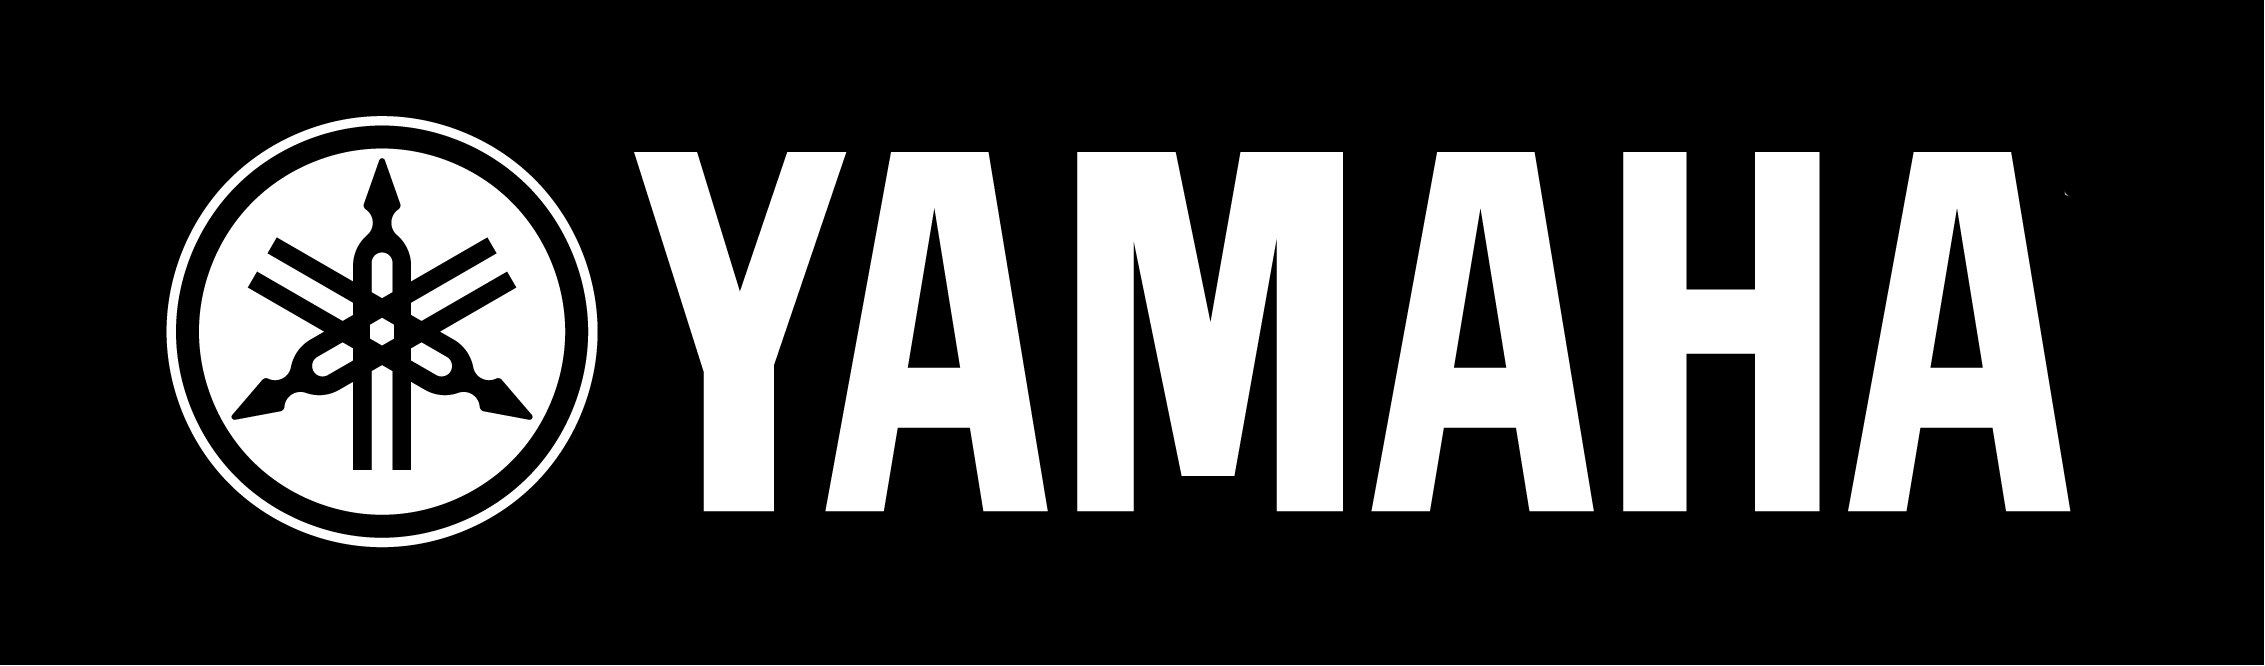 http://www.yamaha.com/YECDealerMedia/adgraphs/logos/1yamaha.jpg